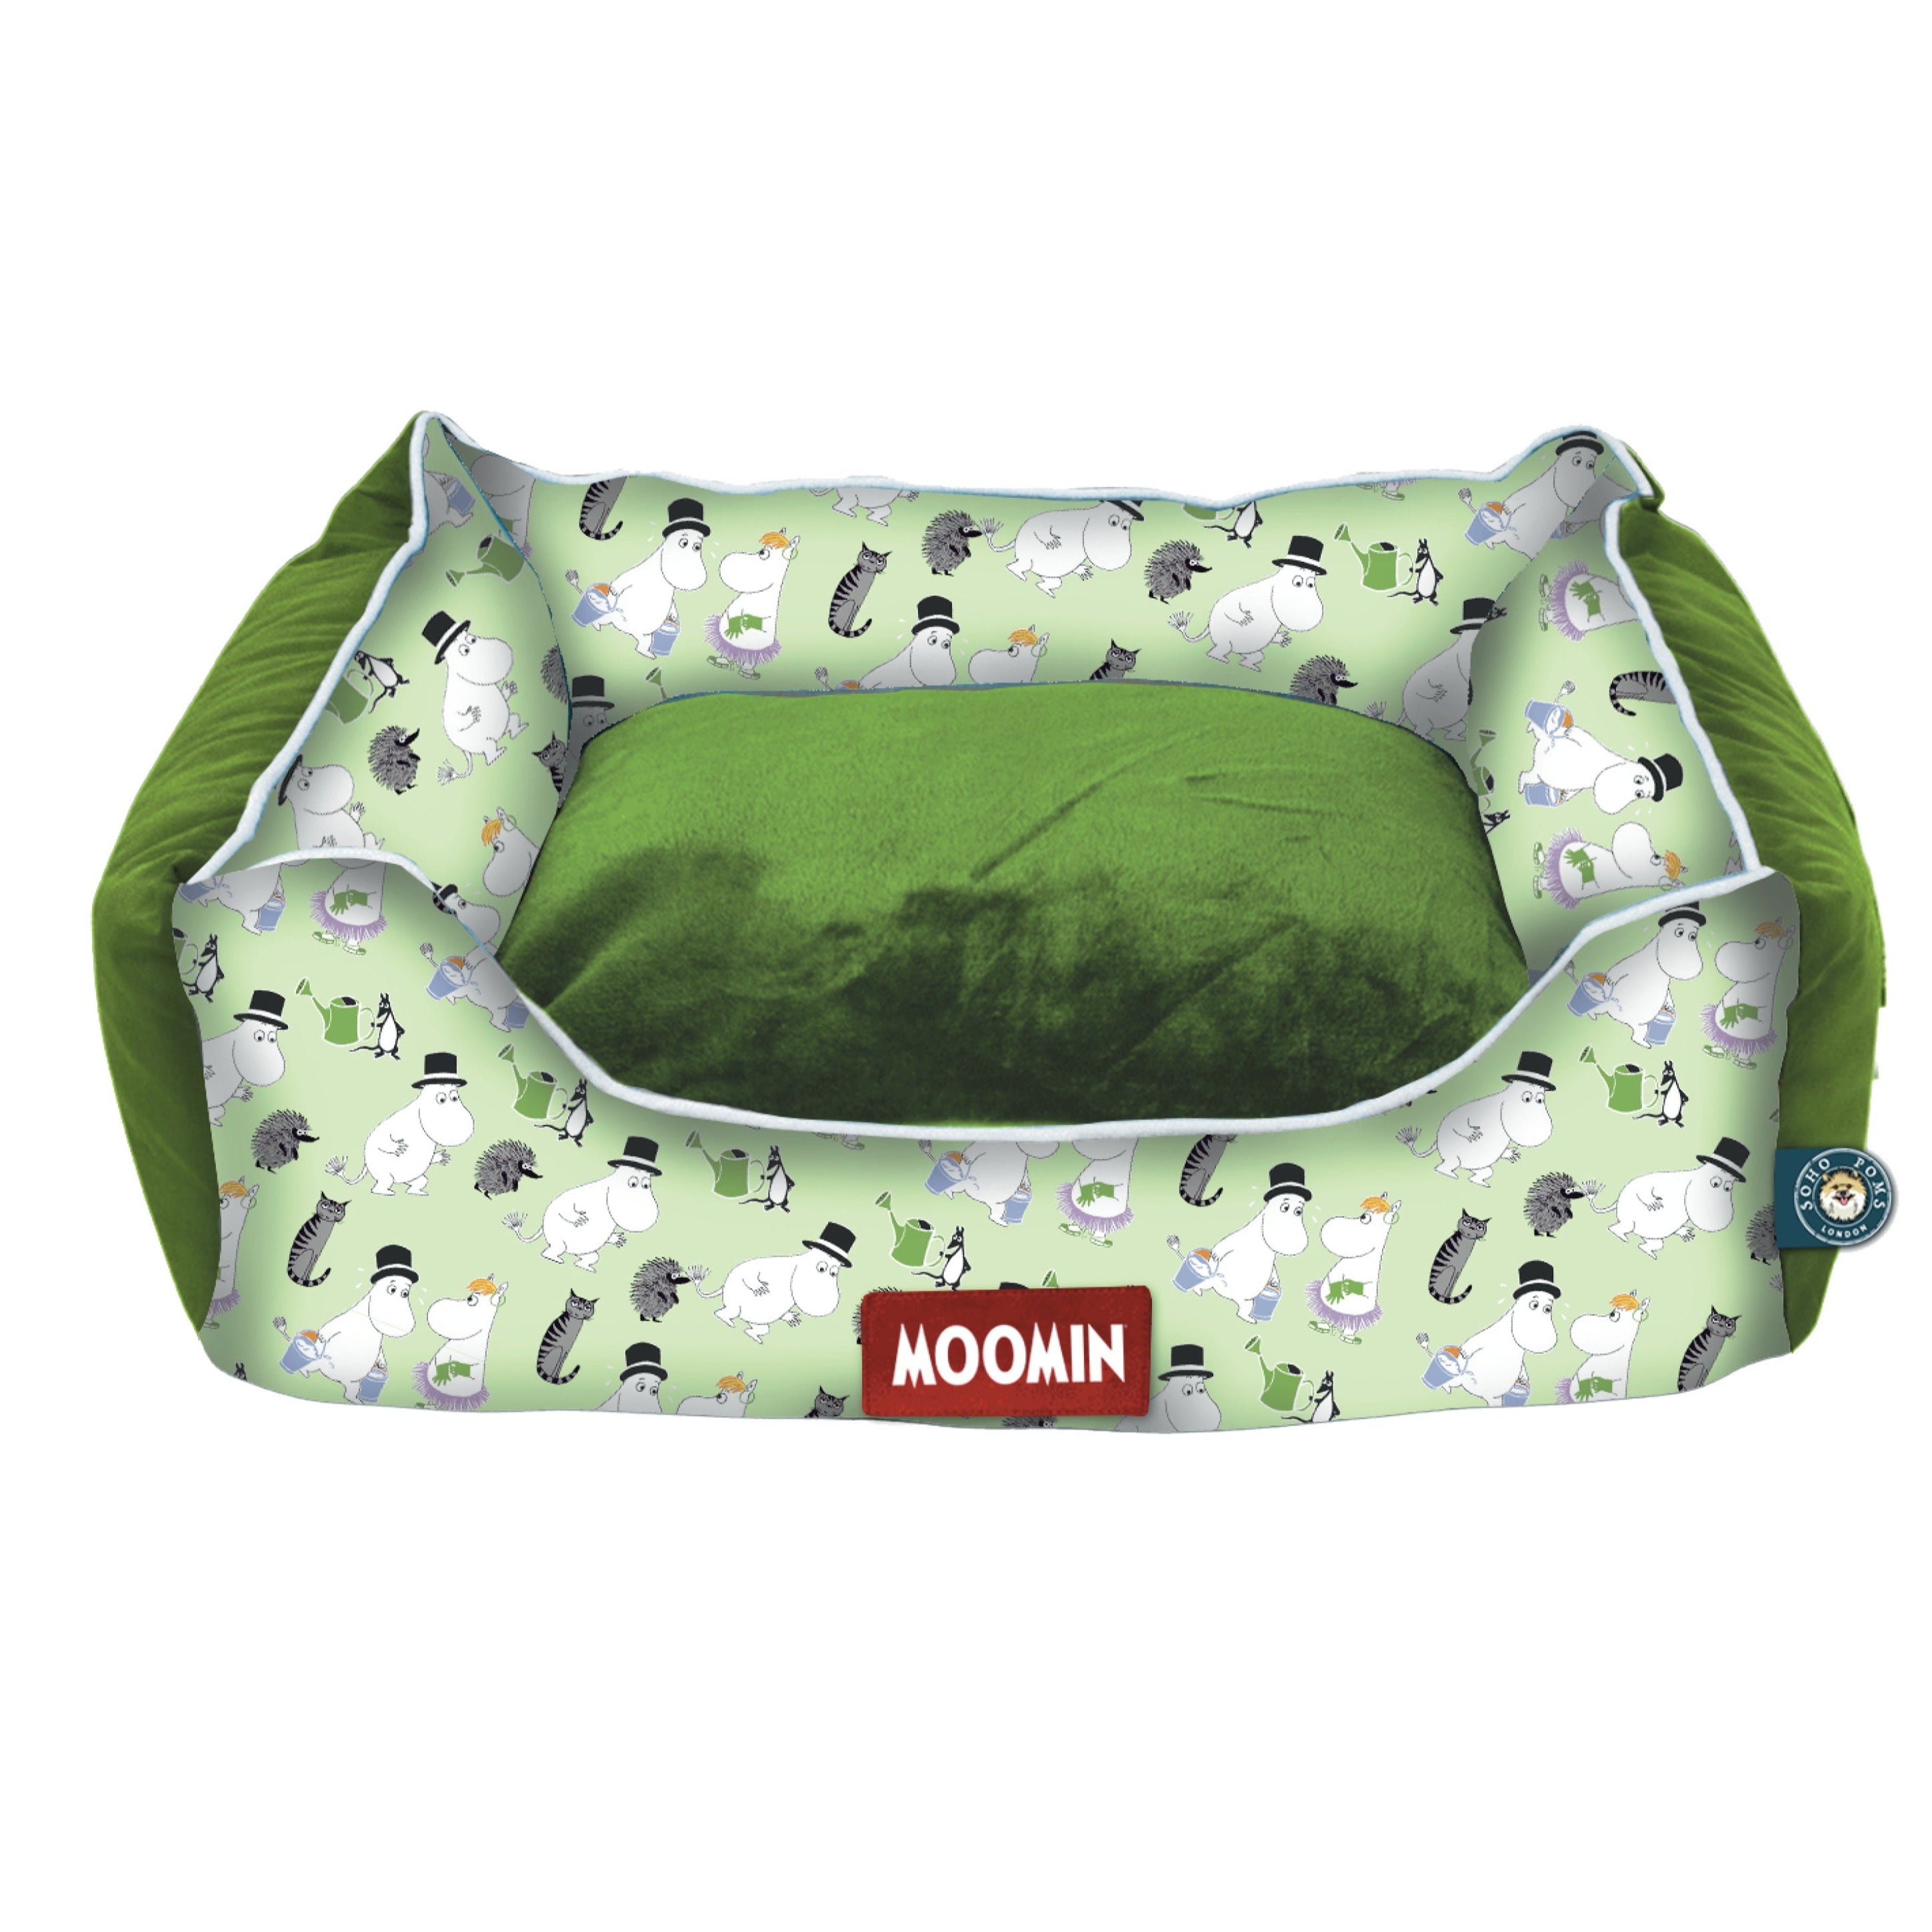 Moomins Green Leaves Bed by SohoPoms